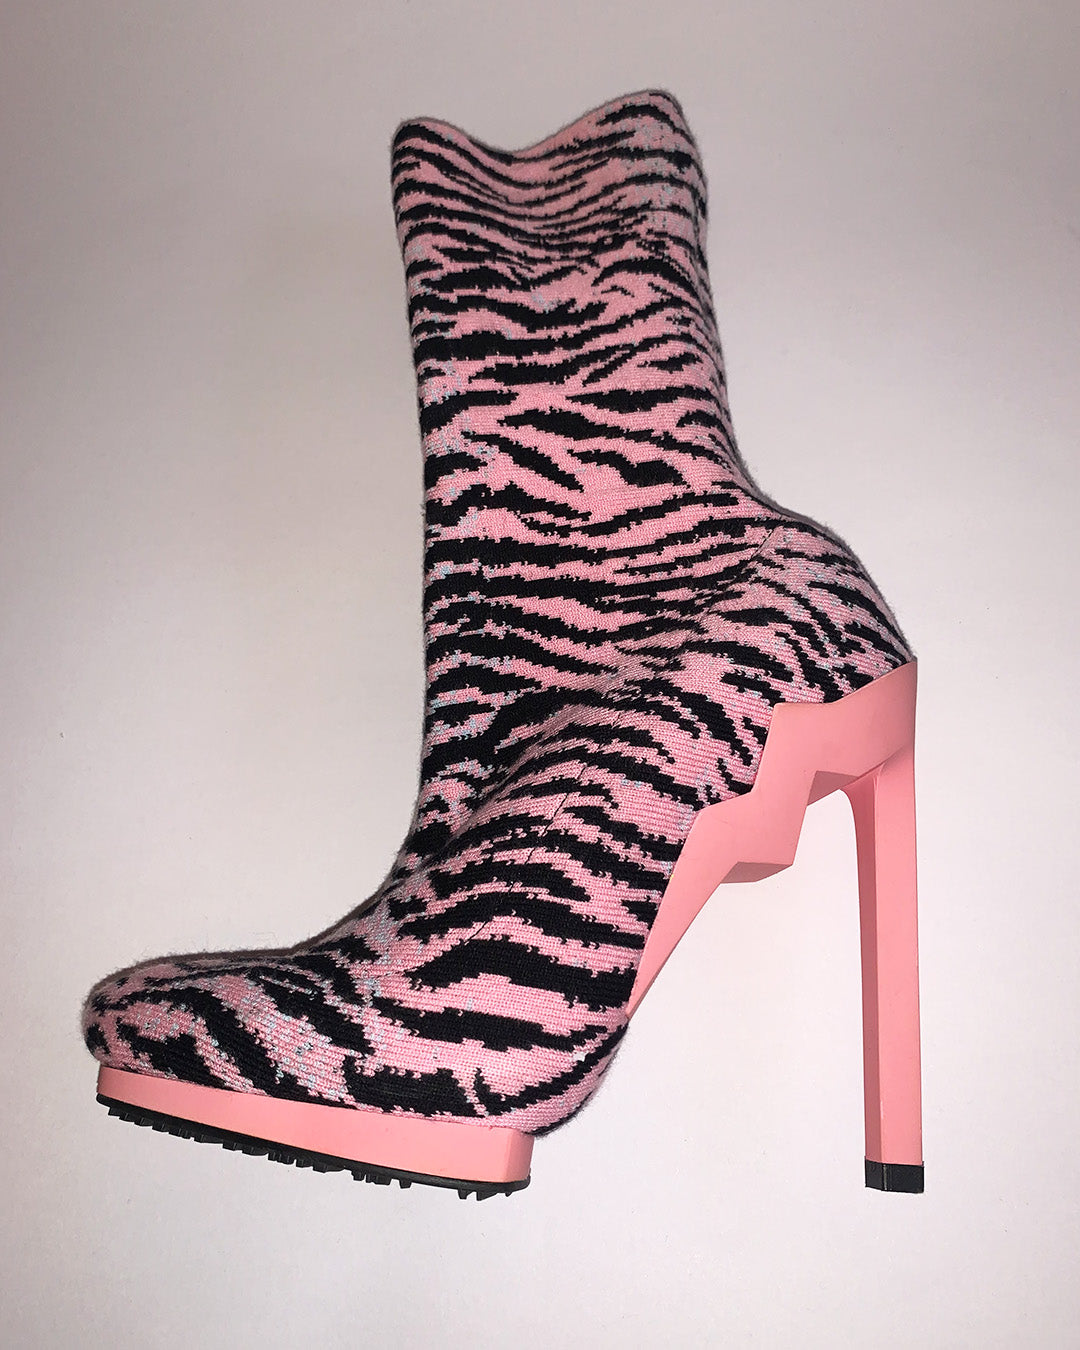 KENZO X H&M Pink Zebra Boots